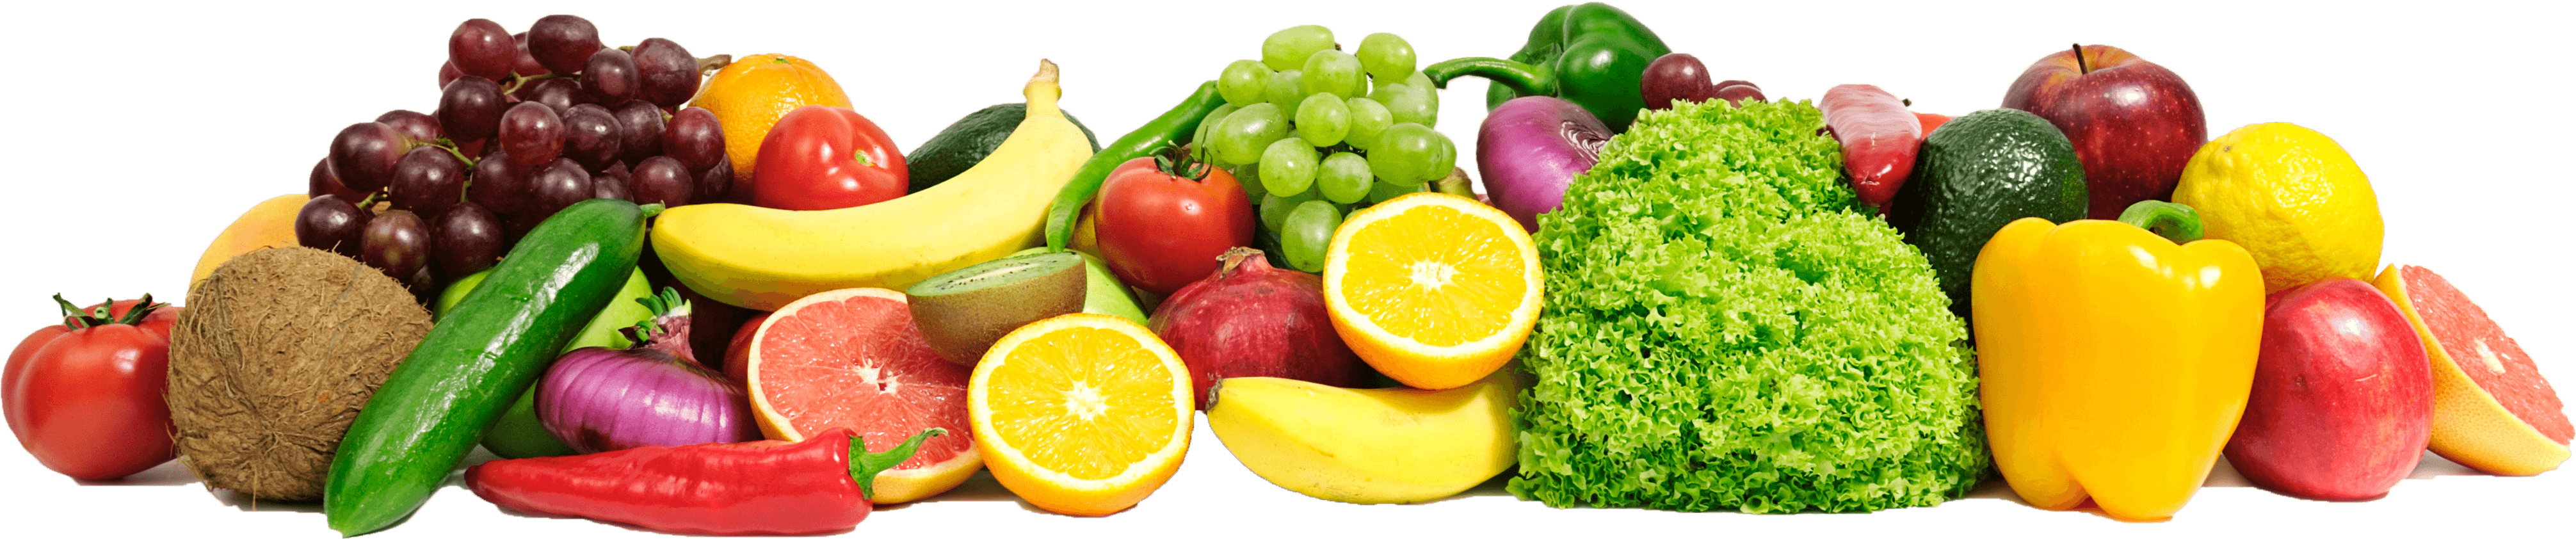 Sfondo Trasparente di frutta e verdura fresca